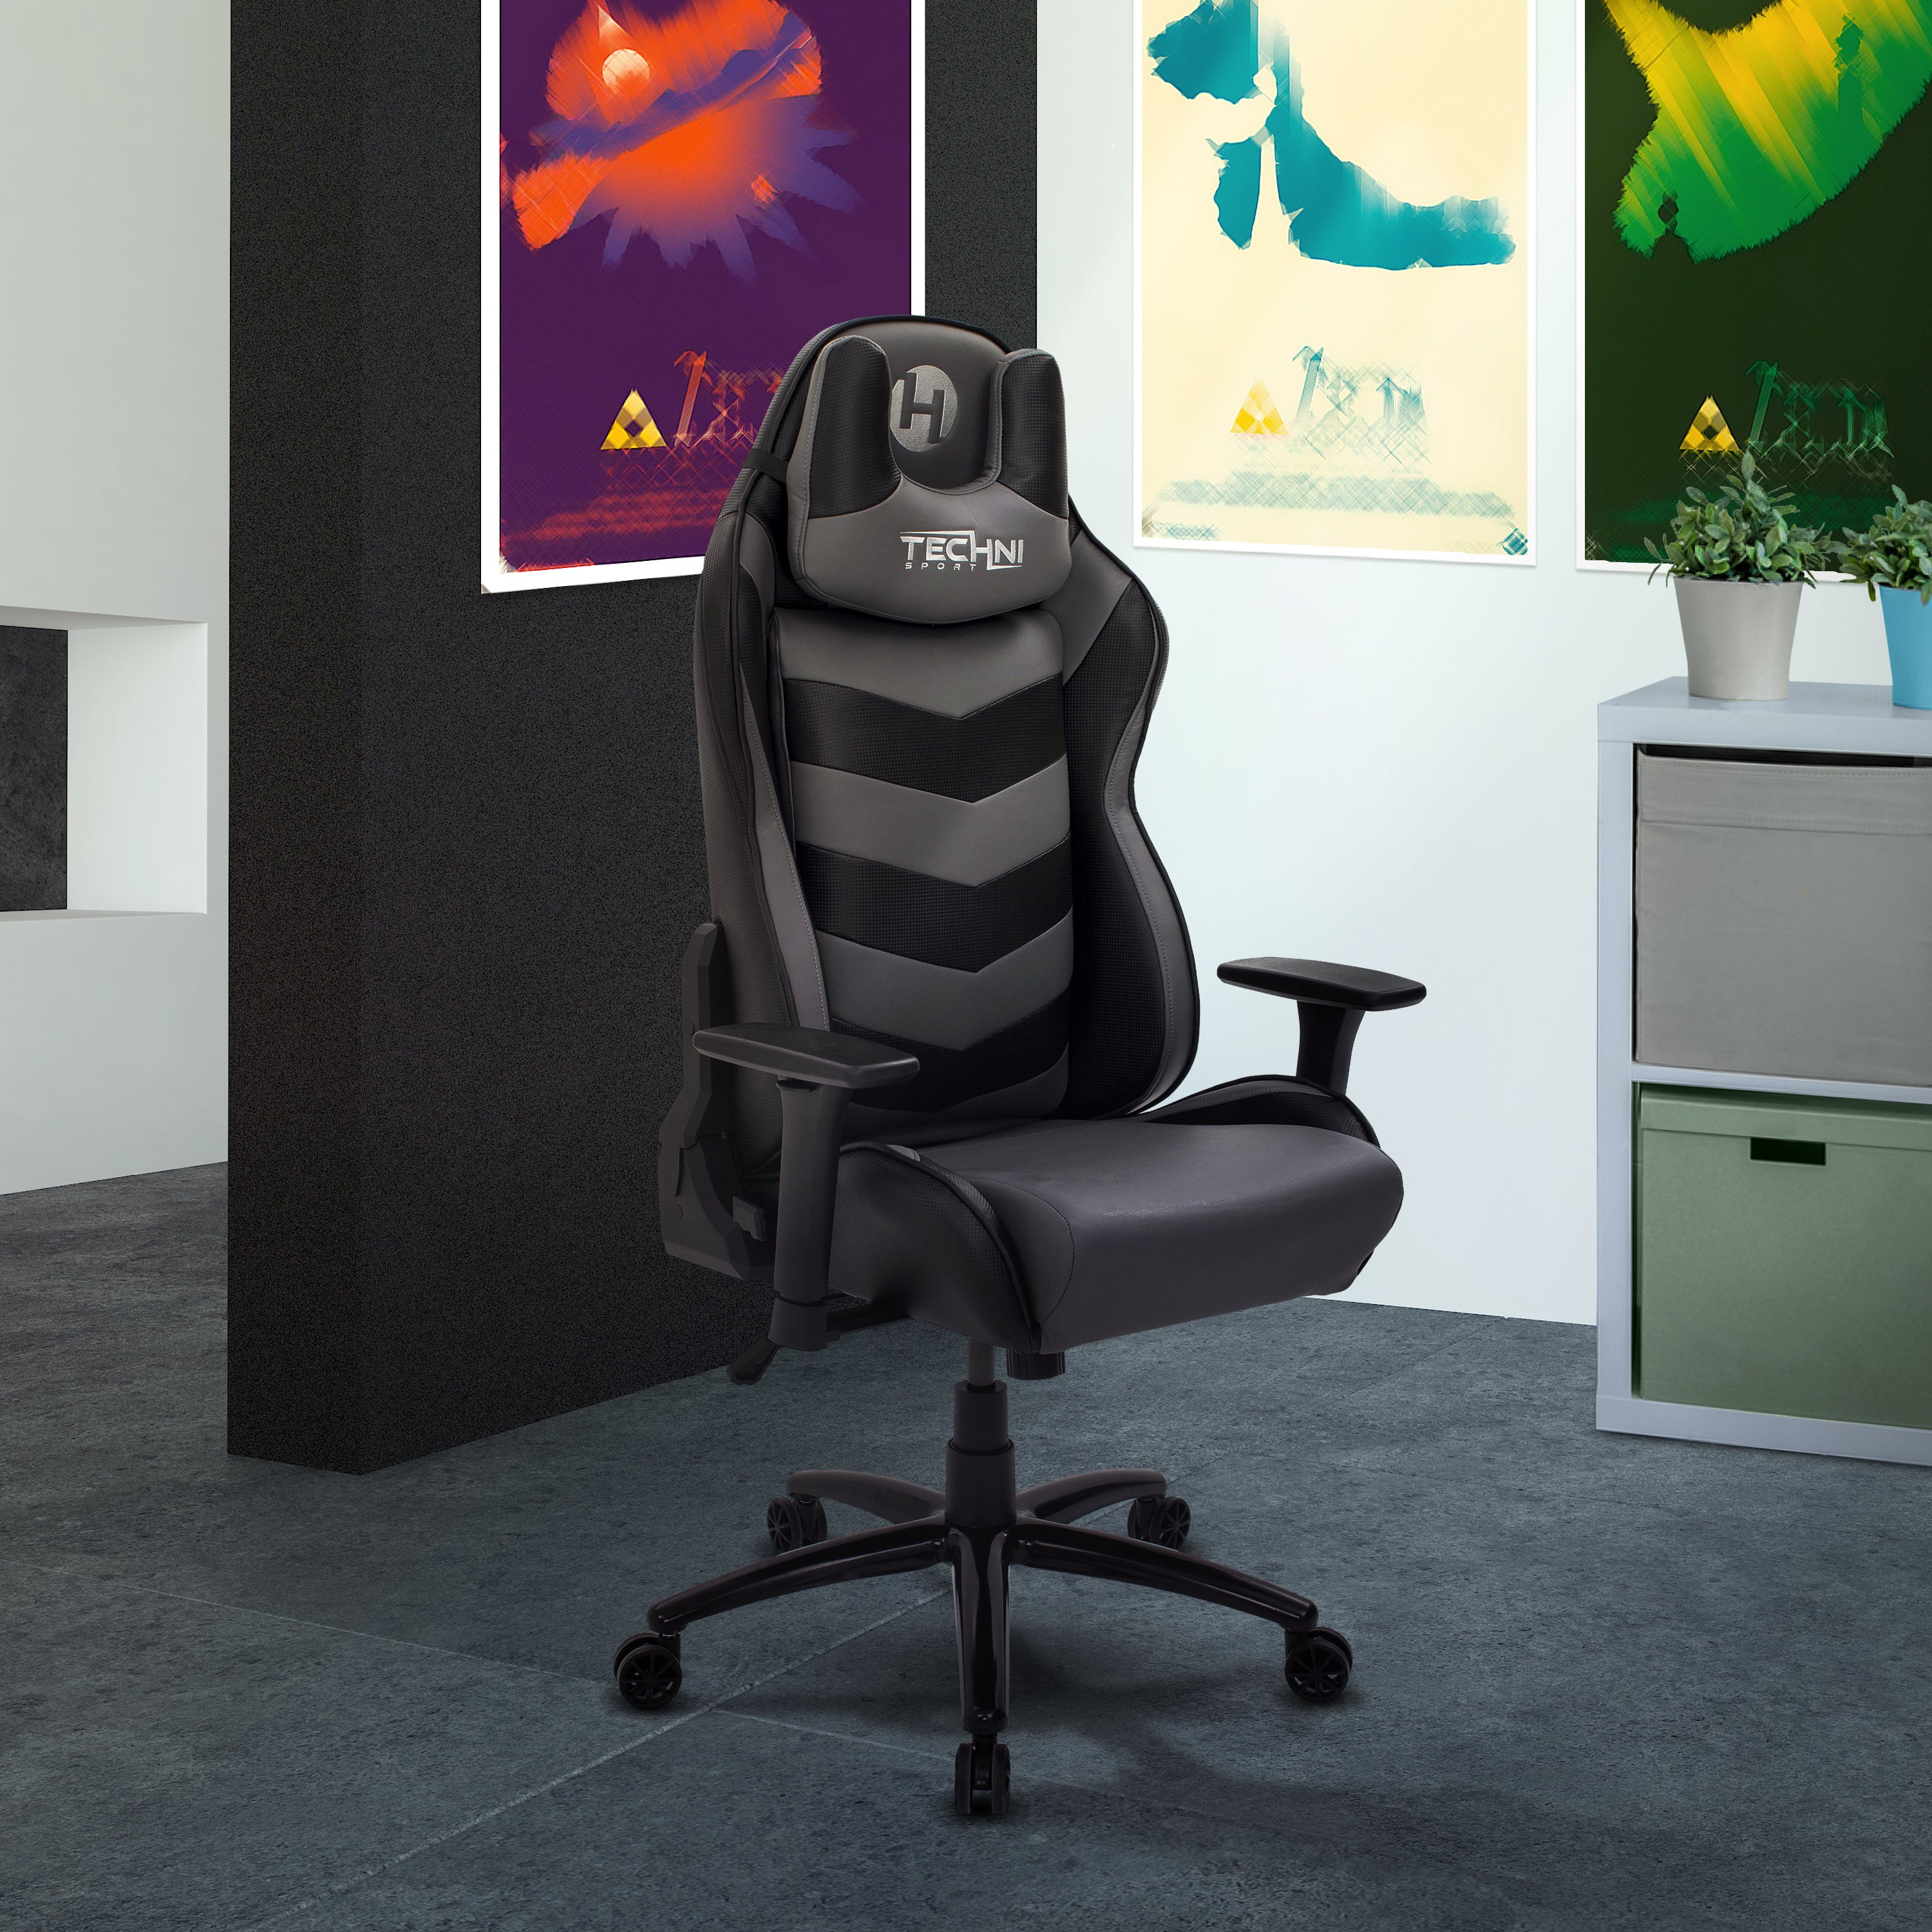 Techni Sport TS-61 Ergonomic High Back Racing Style Gaming Chair (Grey/Black)